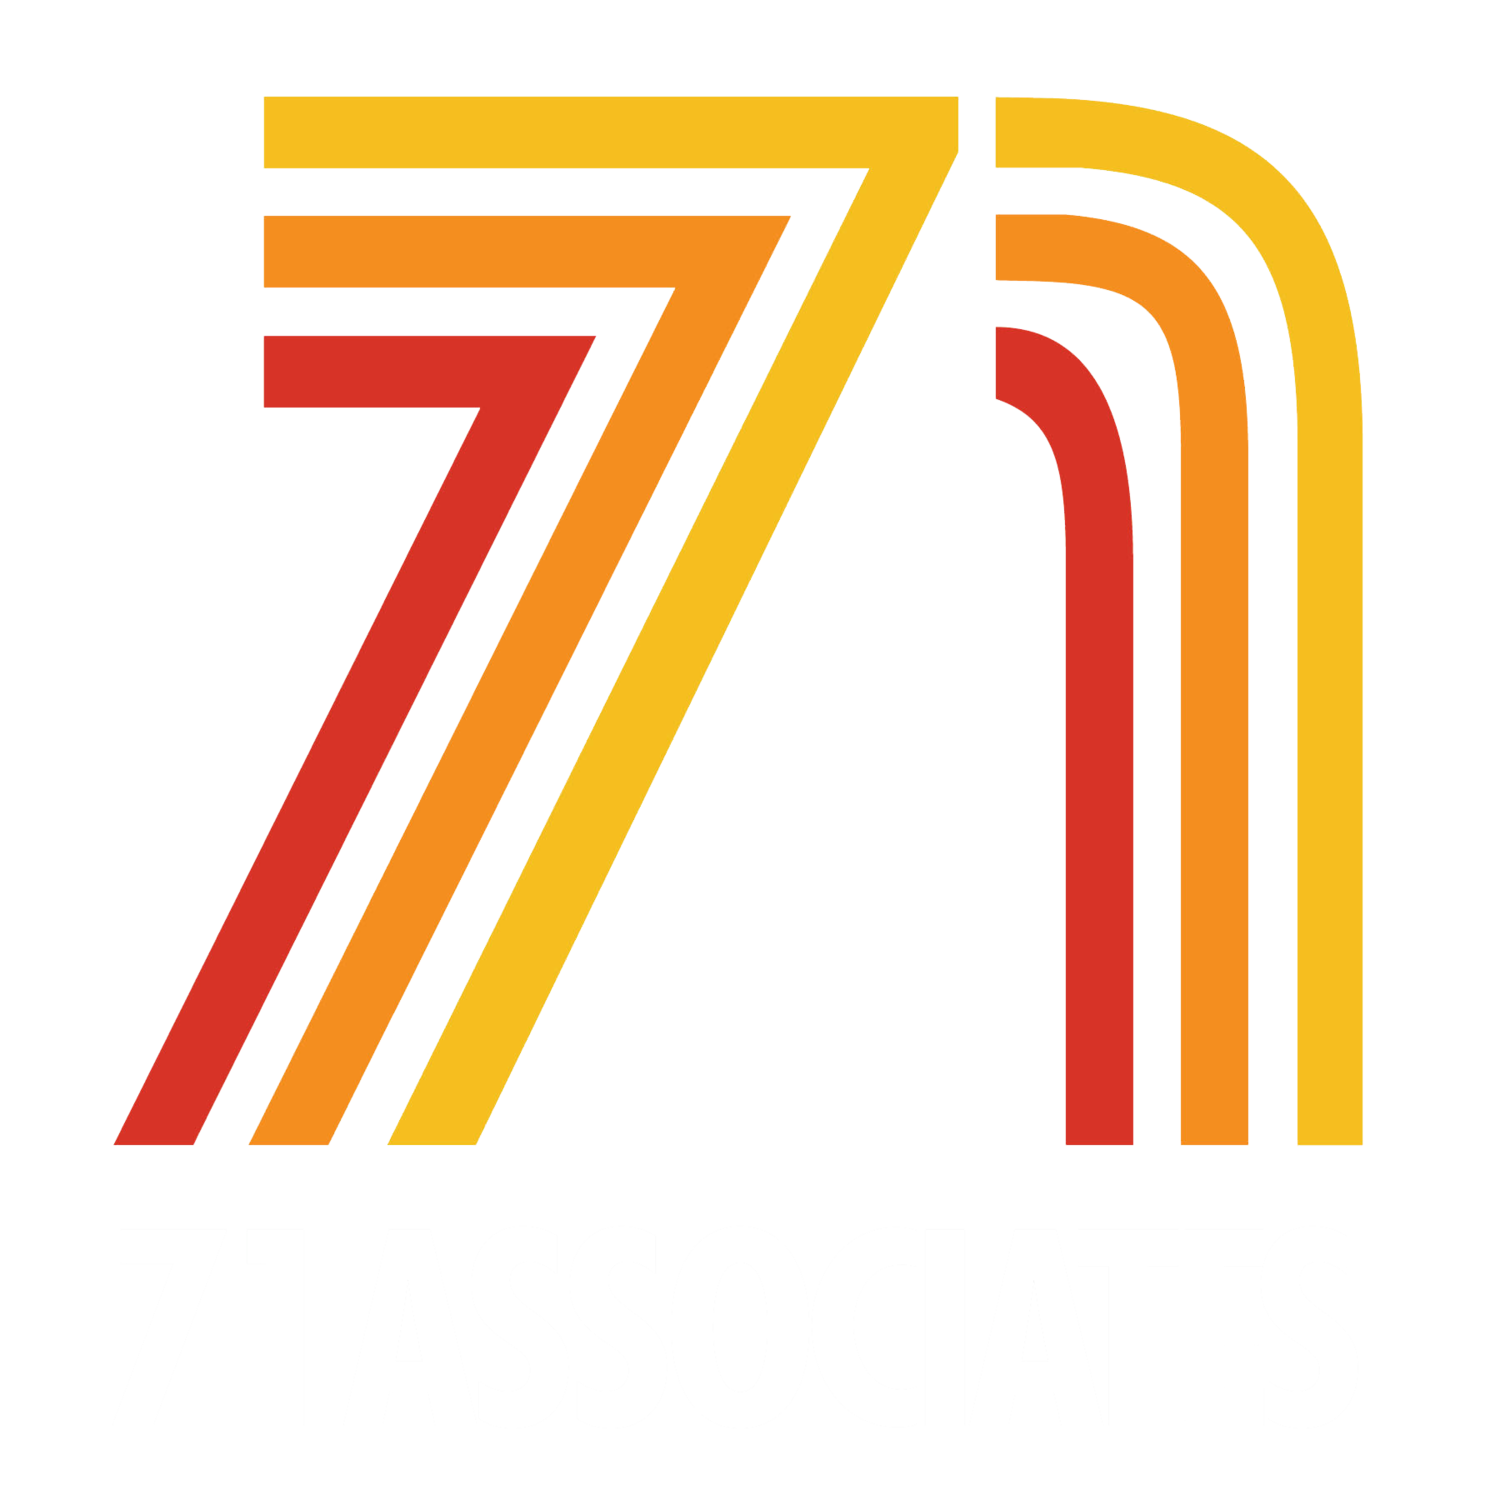 71 Associates.